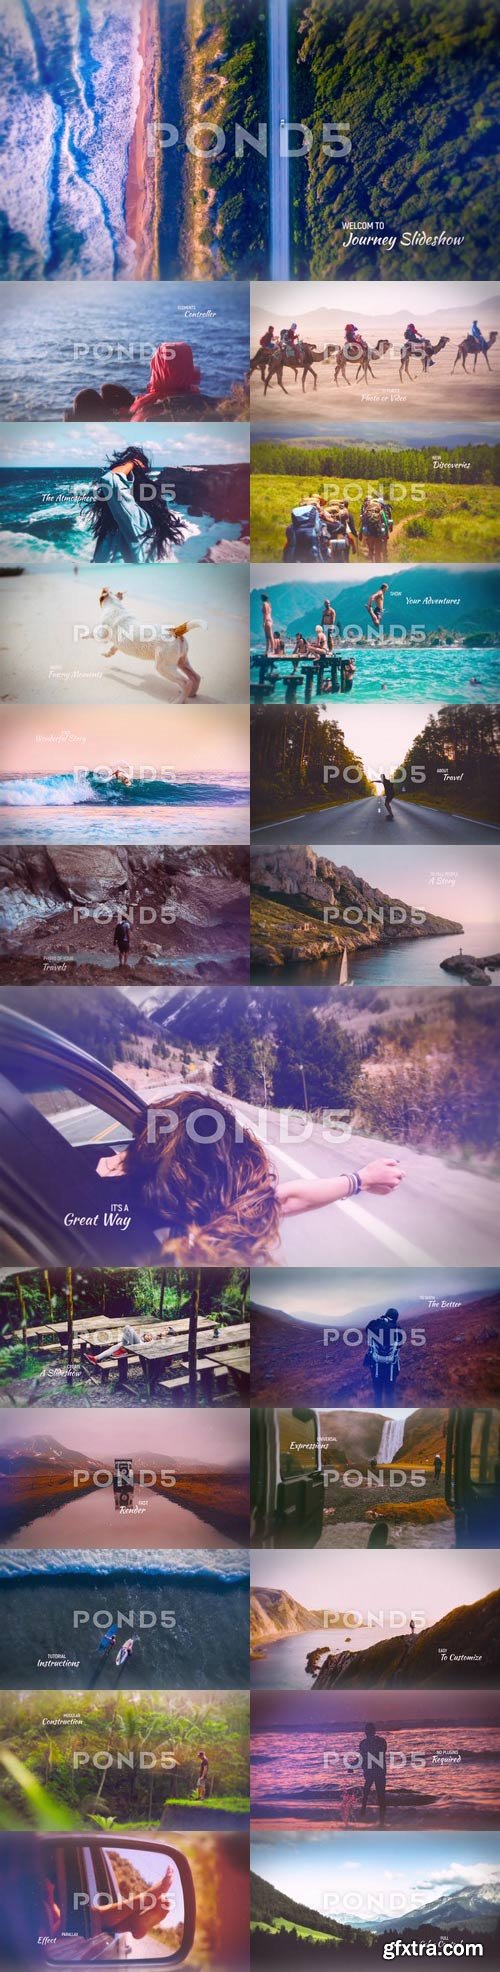 Pond5 - Journey Slideshow 71901732